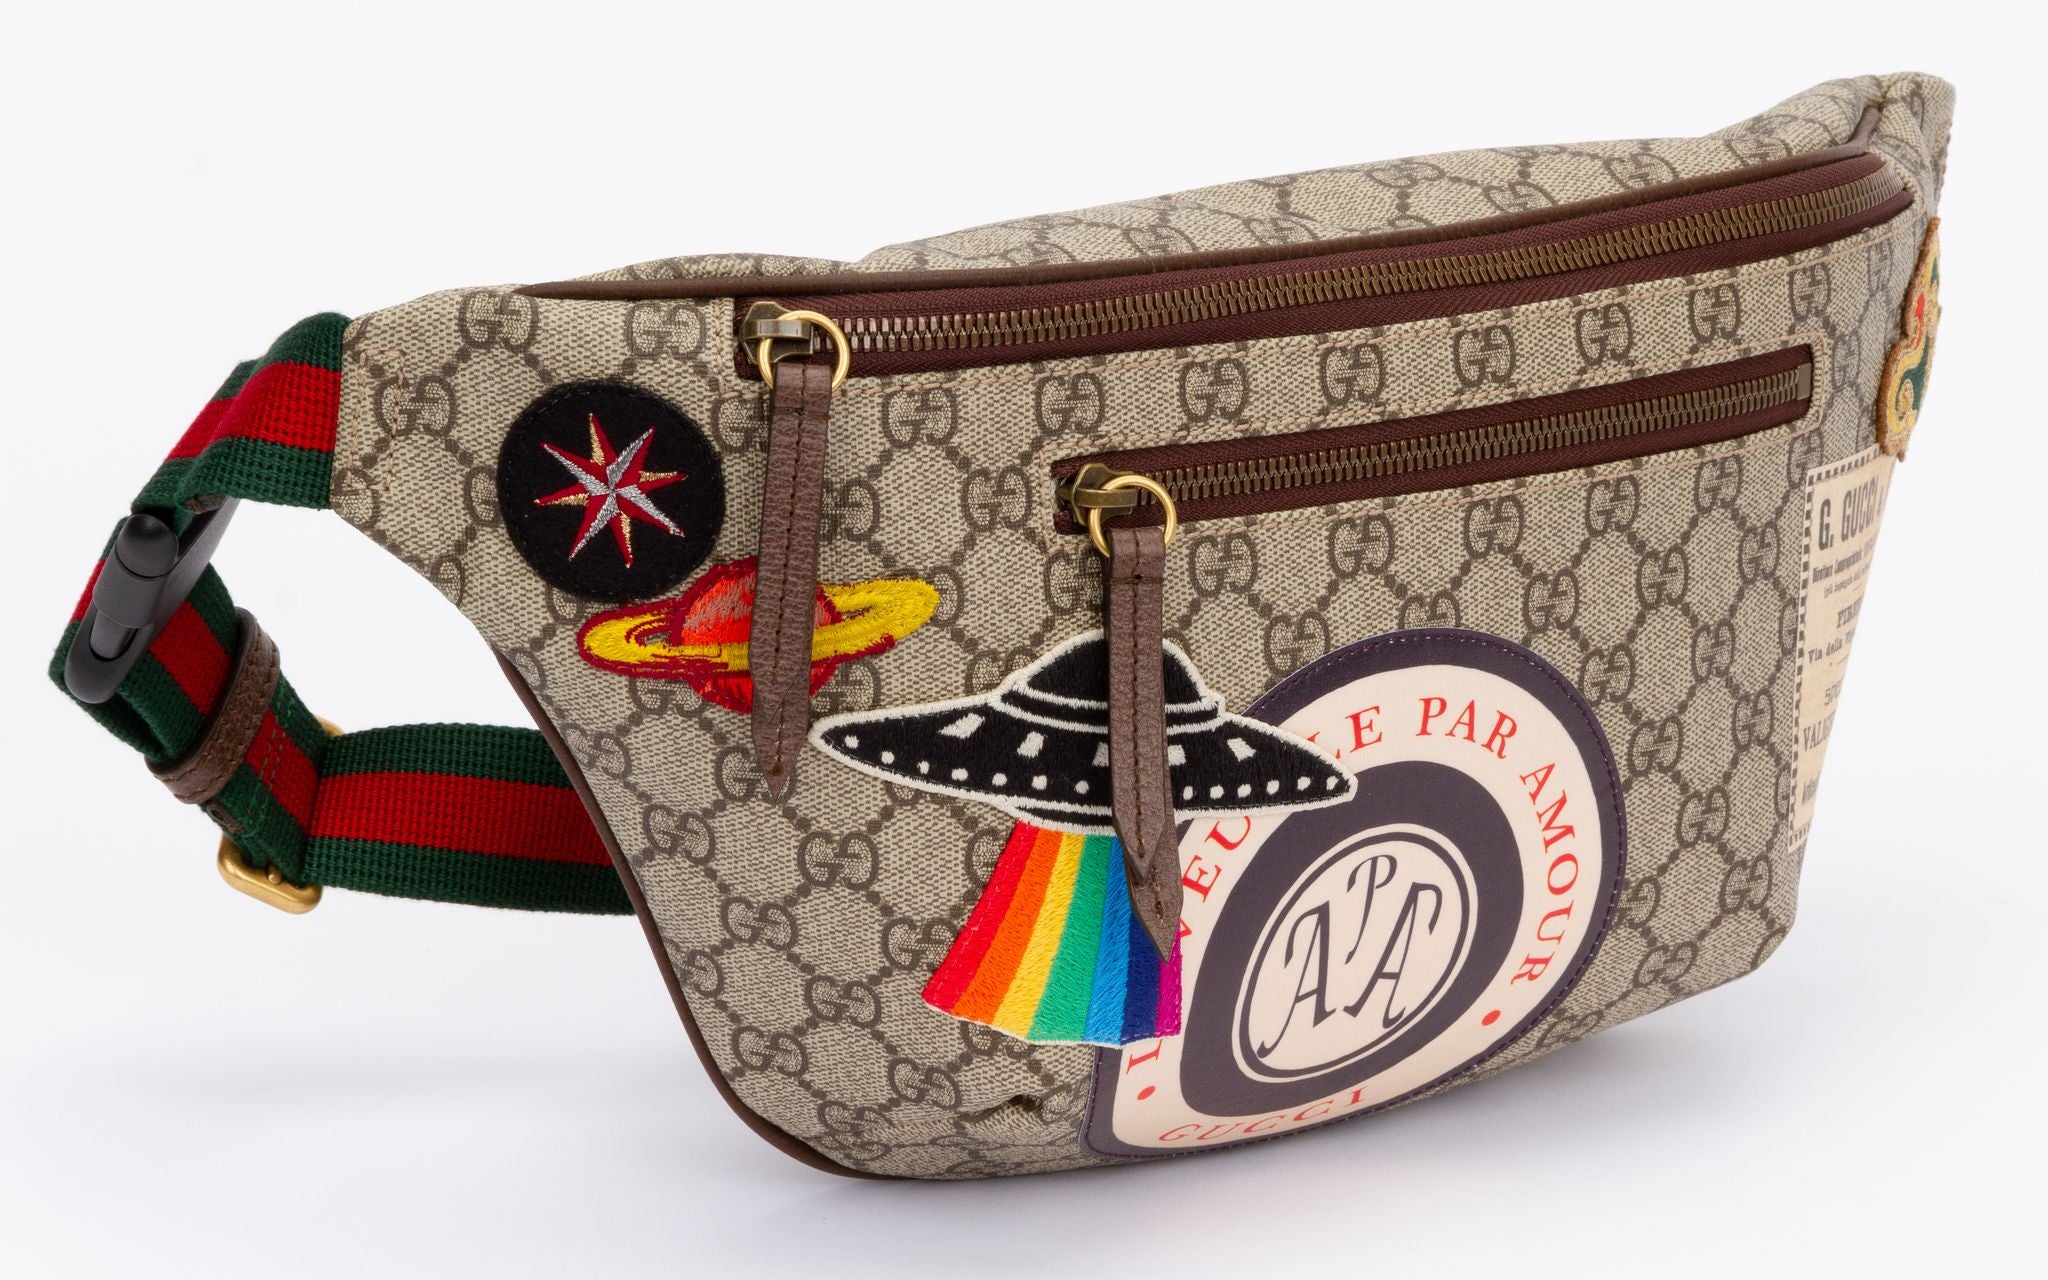 Gucci Courrier Gg Supreme Belt Bag in Brown for Men